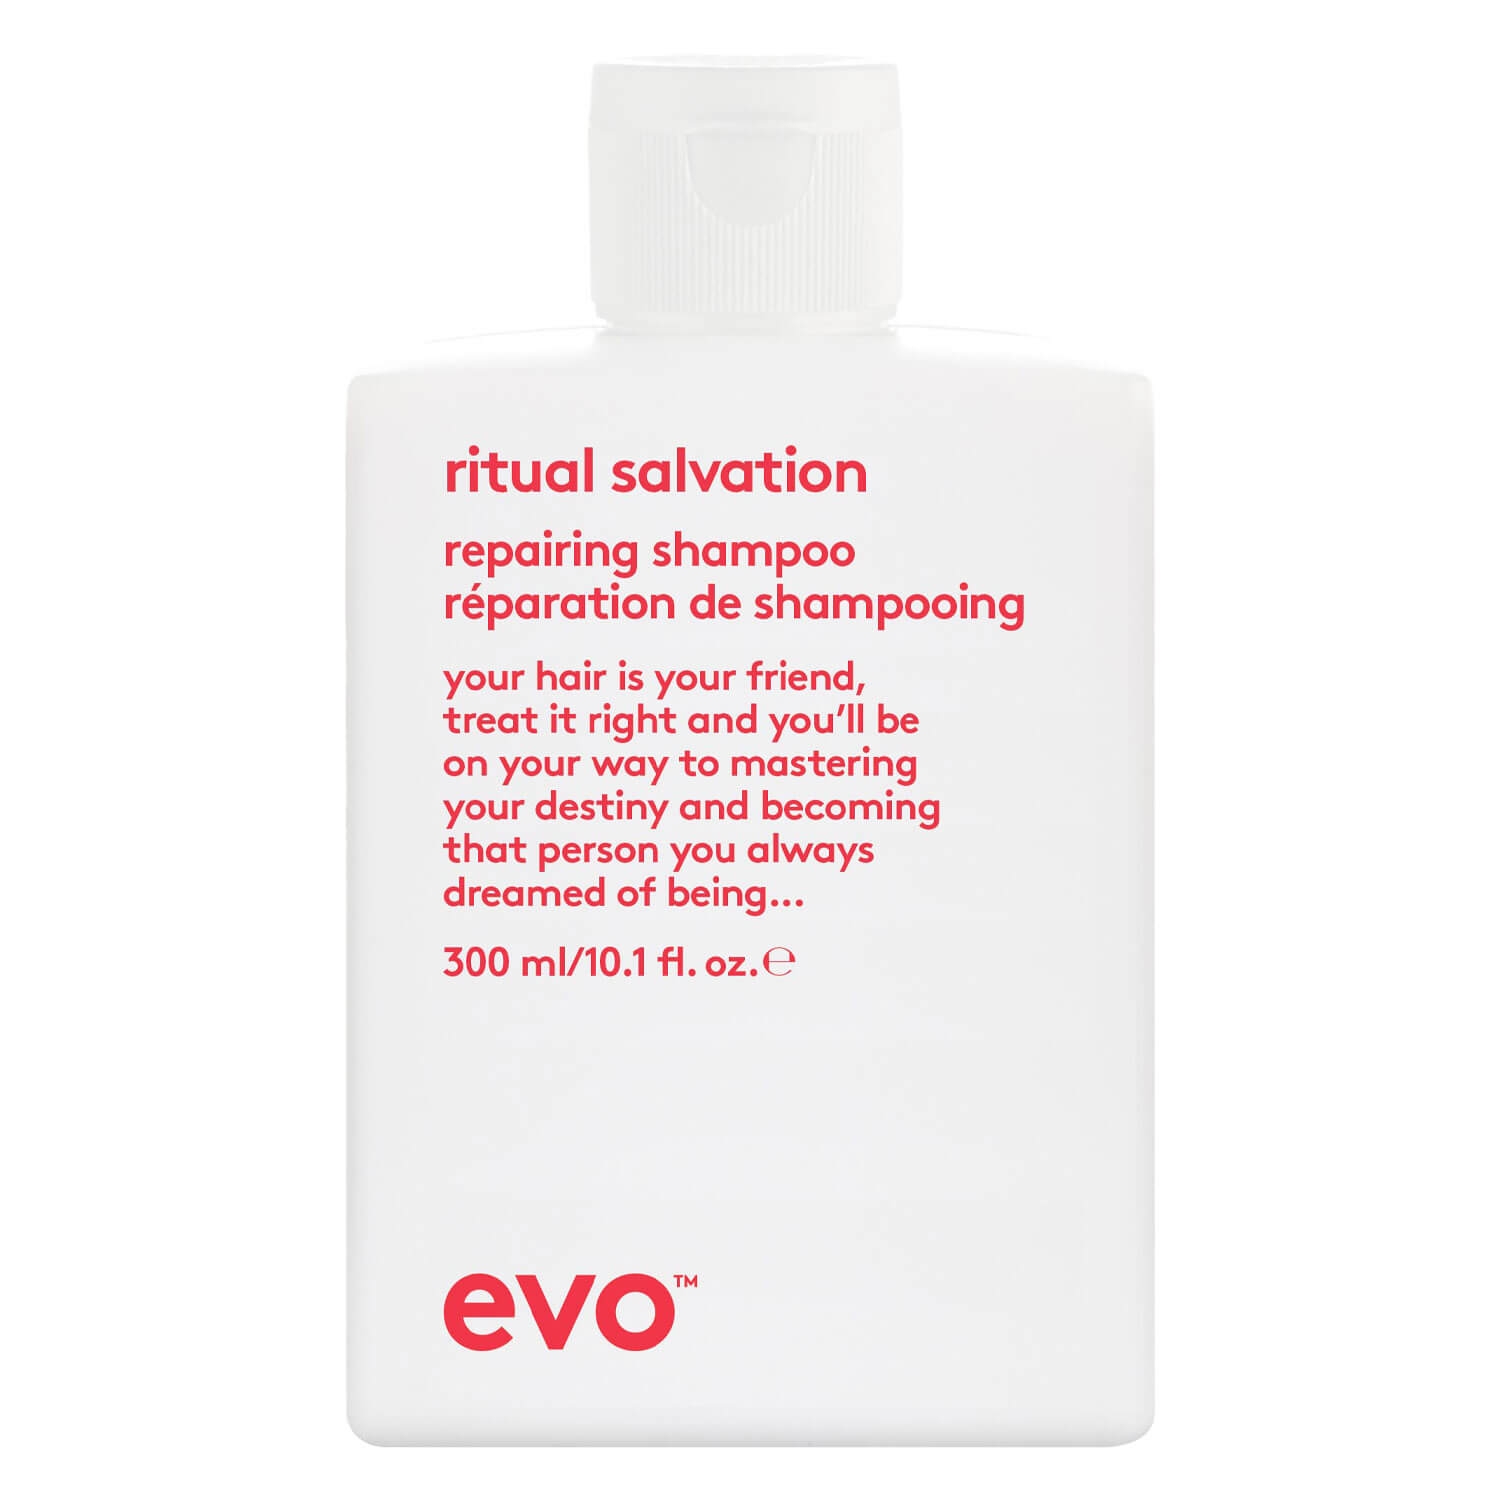 Image du produit de evo care - ritual salvation repairing shampoo